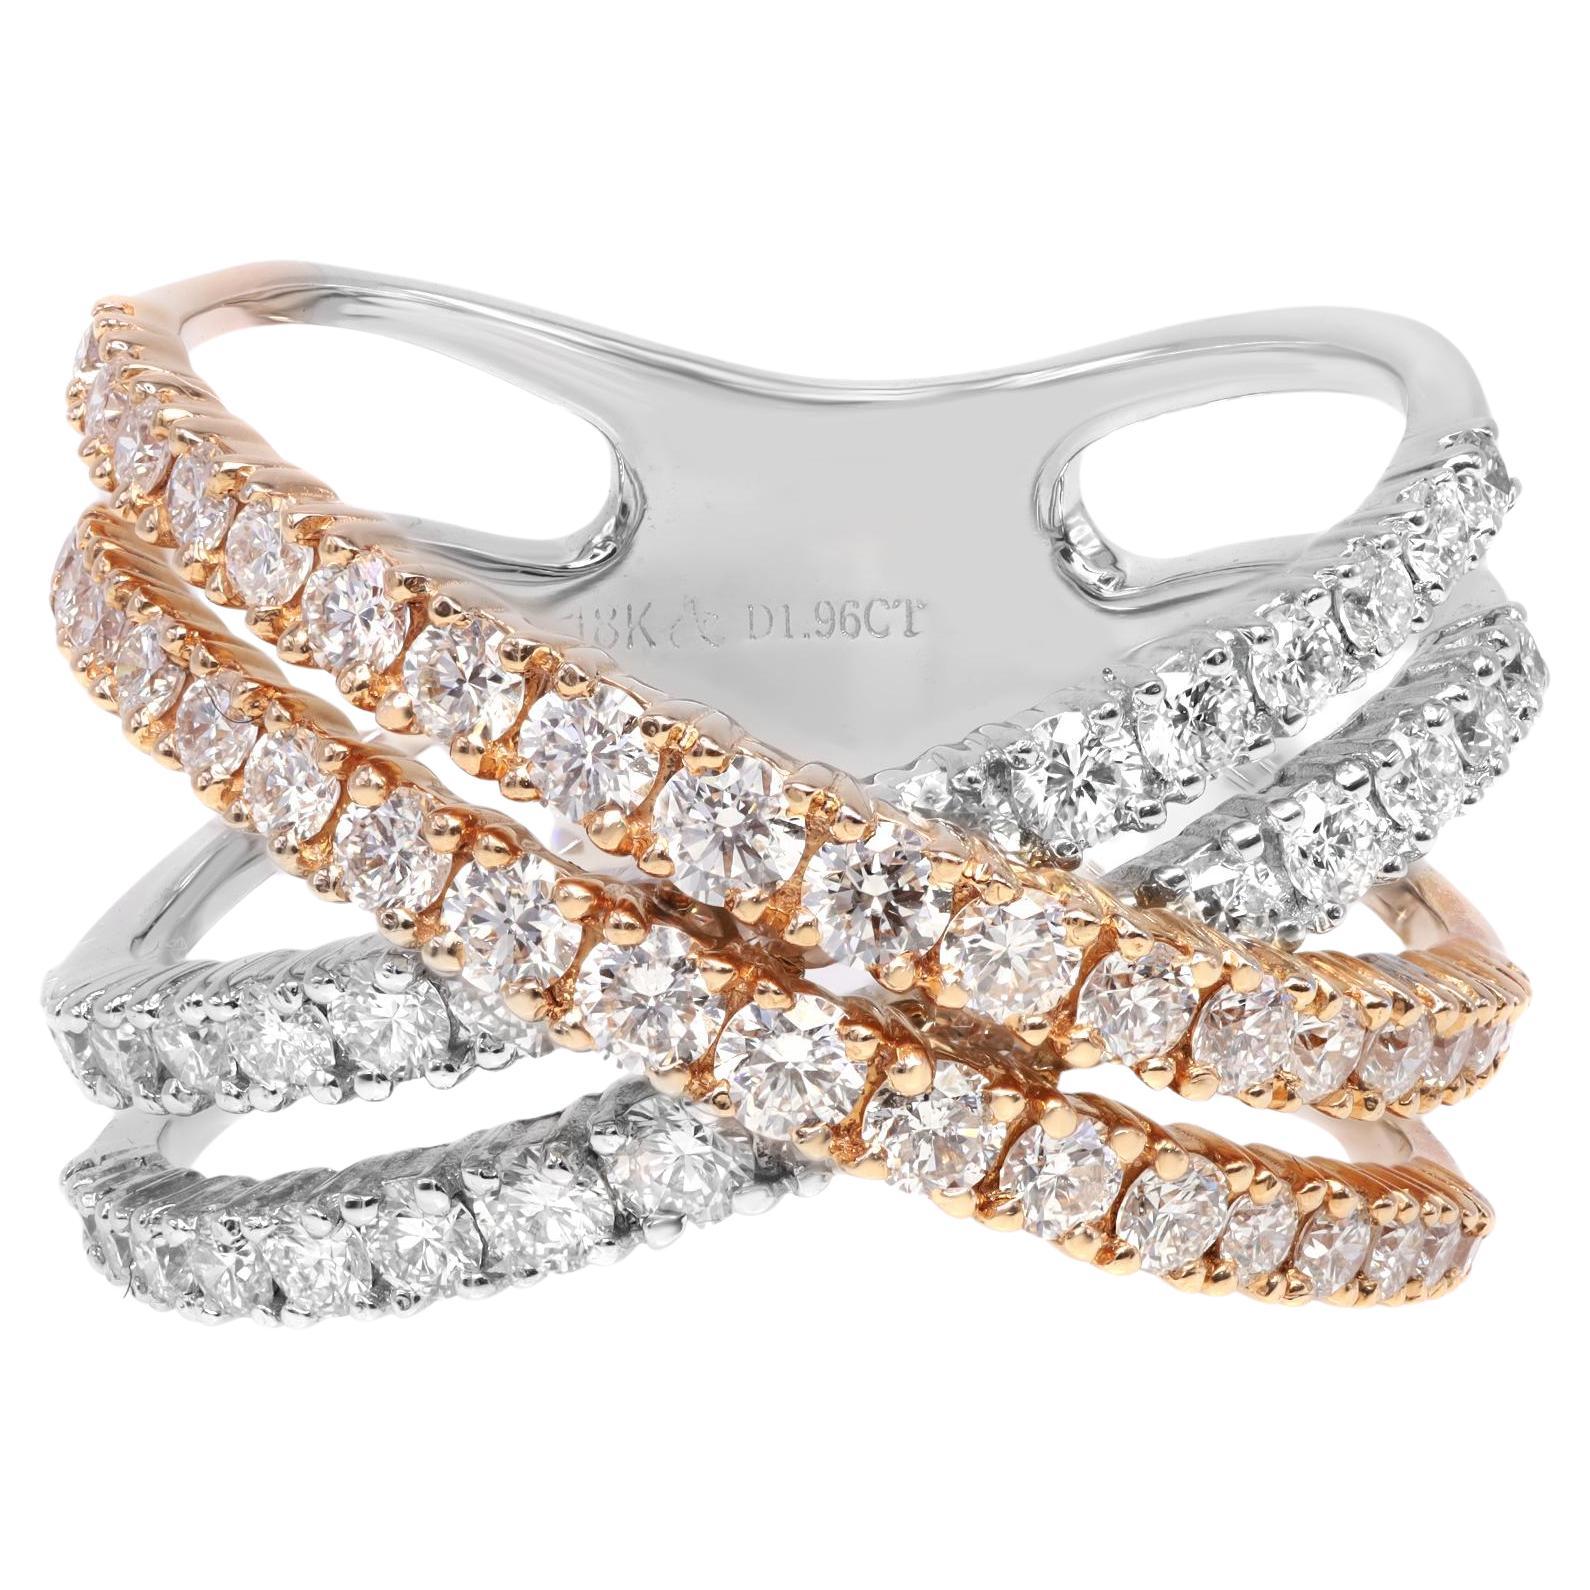 Natural Diamond Two Tone Crisscross Ring 18K White & Rose Gold 1.96Cttw